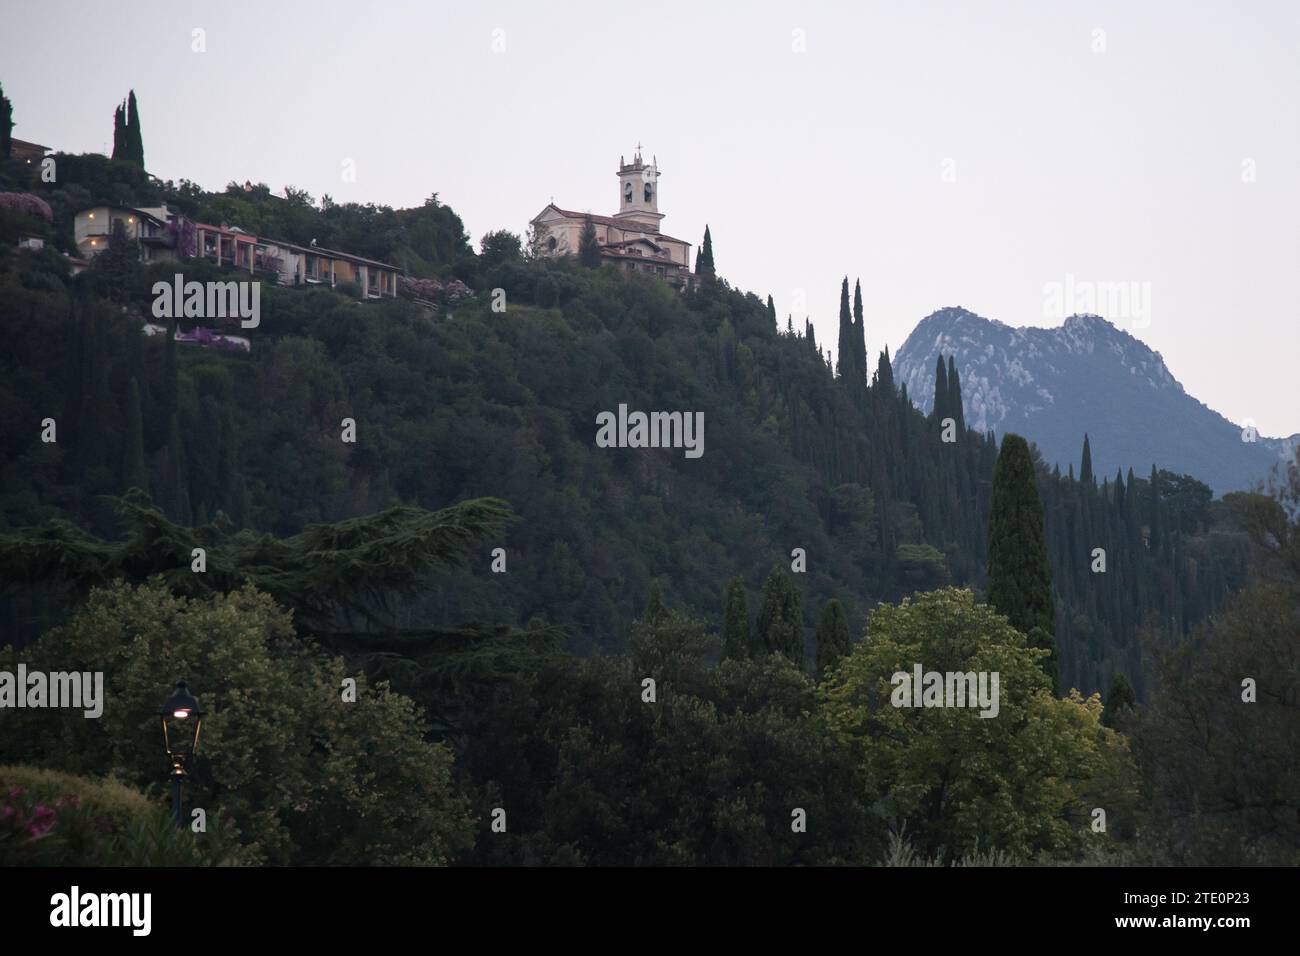 Chiesa di Montemaderno in Toscolano Maderno, Province of Brescia, Lombardy, Italy © Wojciech Strozyk / Alamy Stock Photo Stock Photo